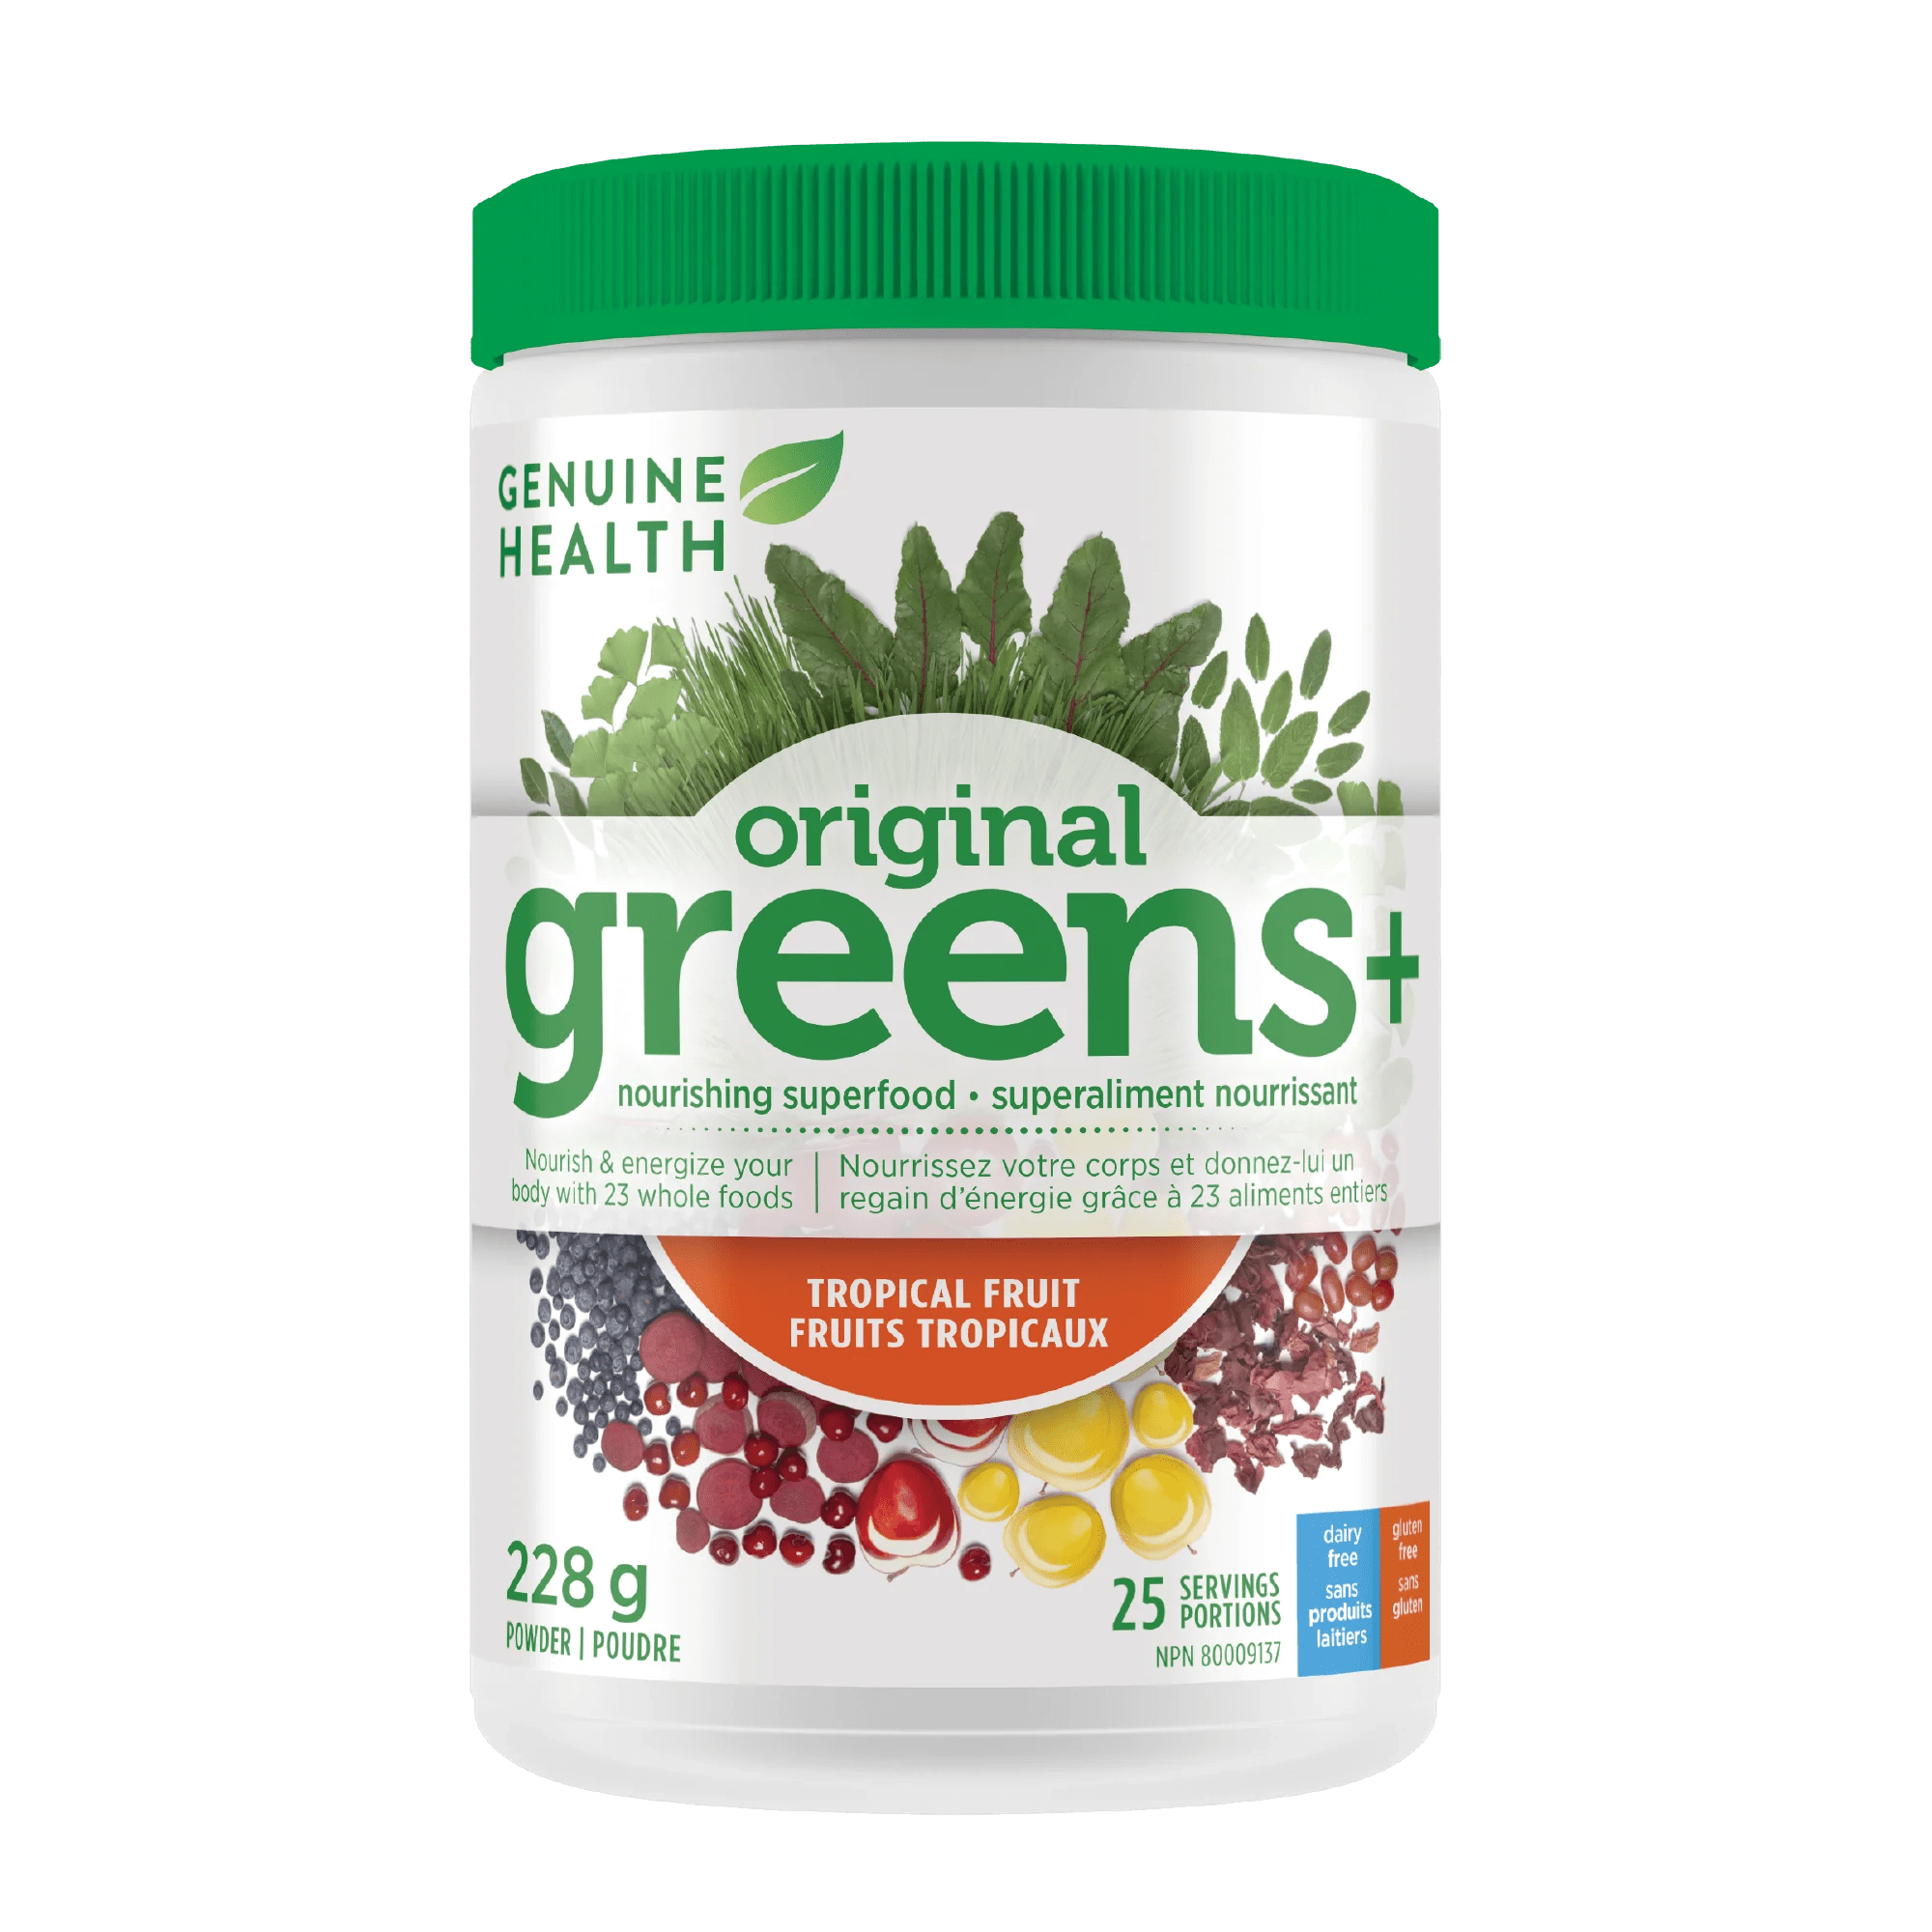 GENUINE HEALTH Suppléments Greens+ fruits tropicaux 228g